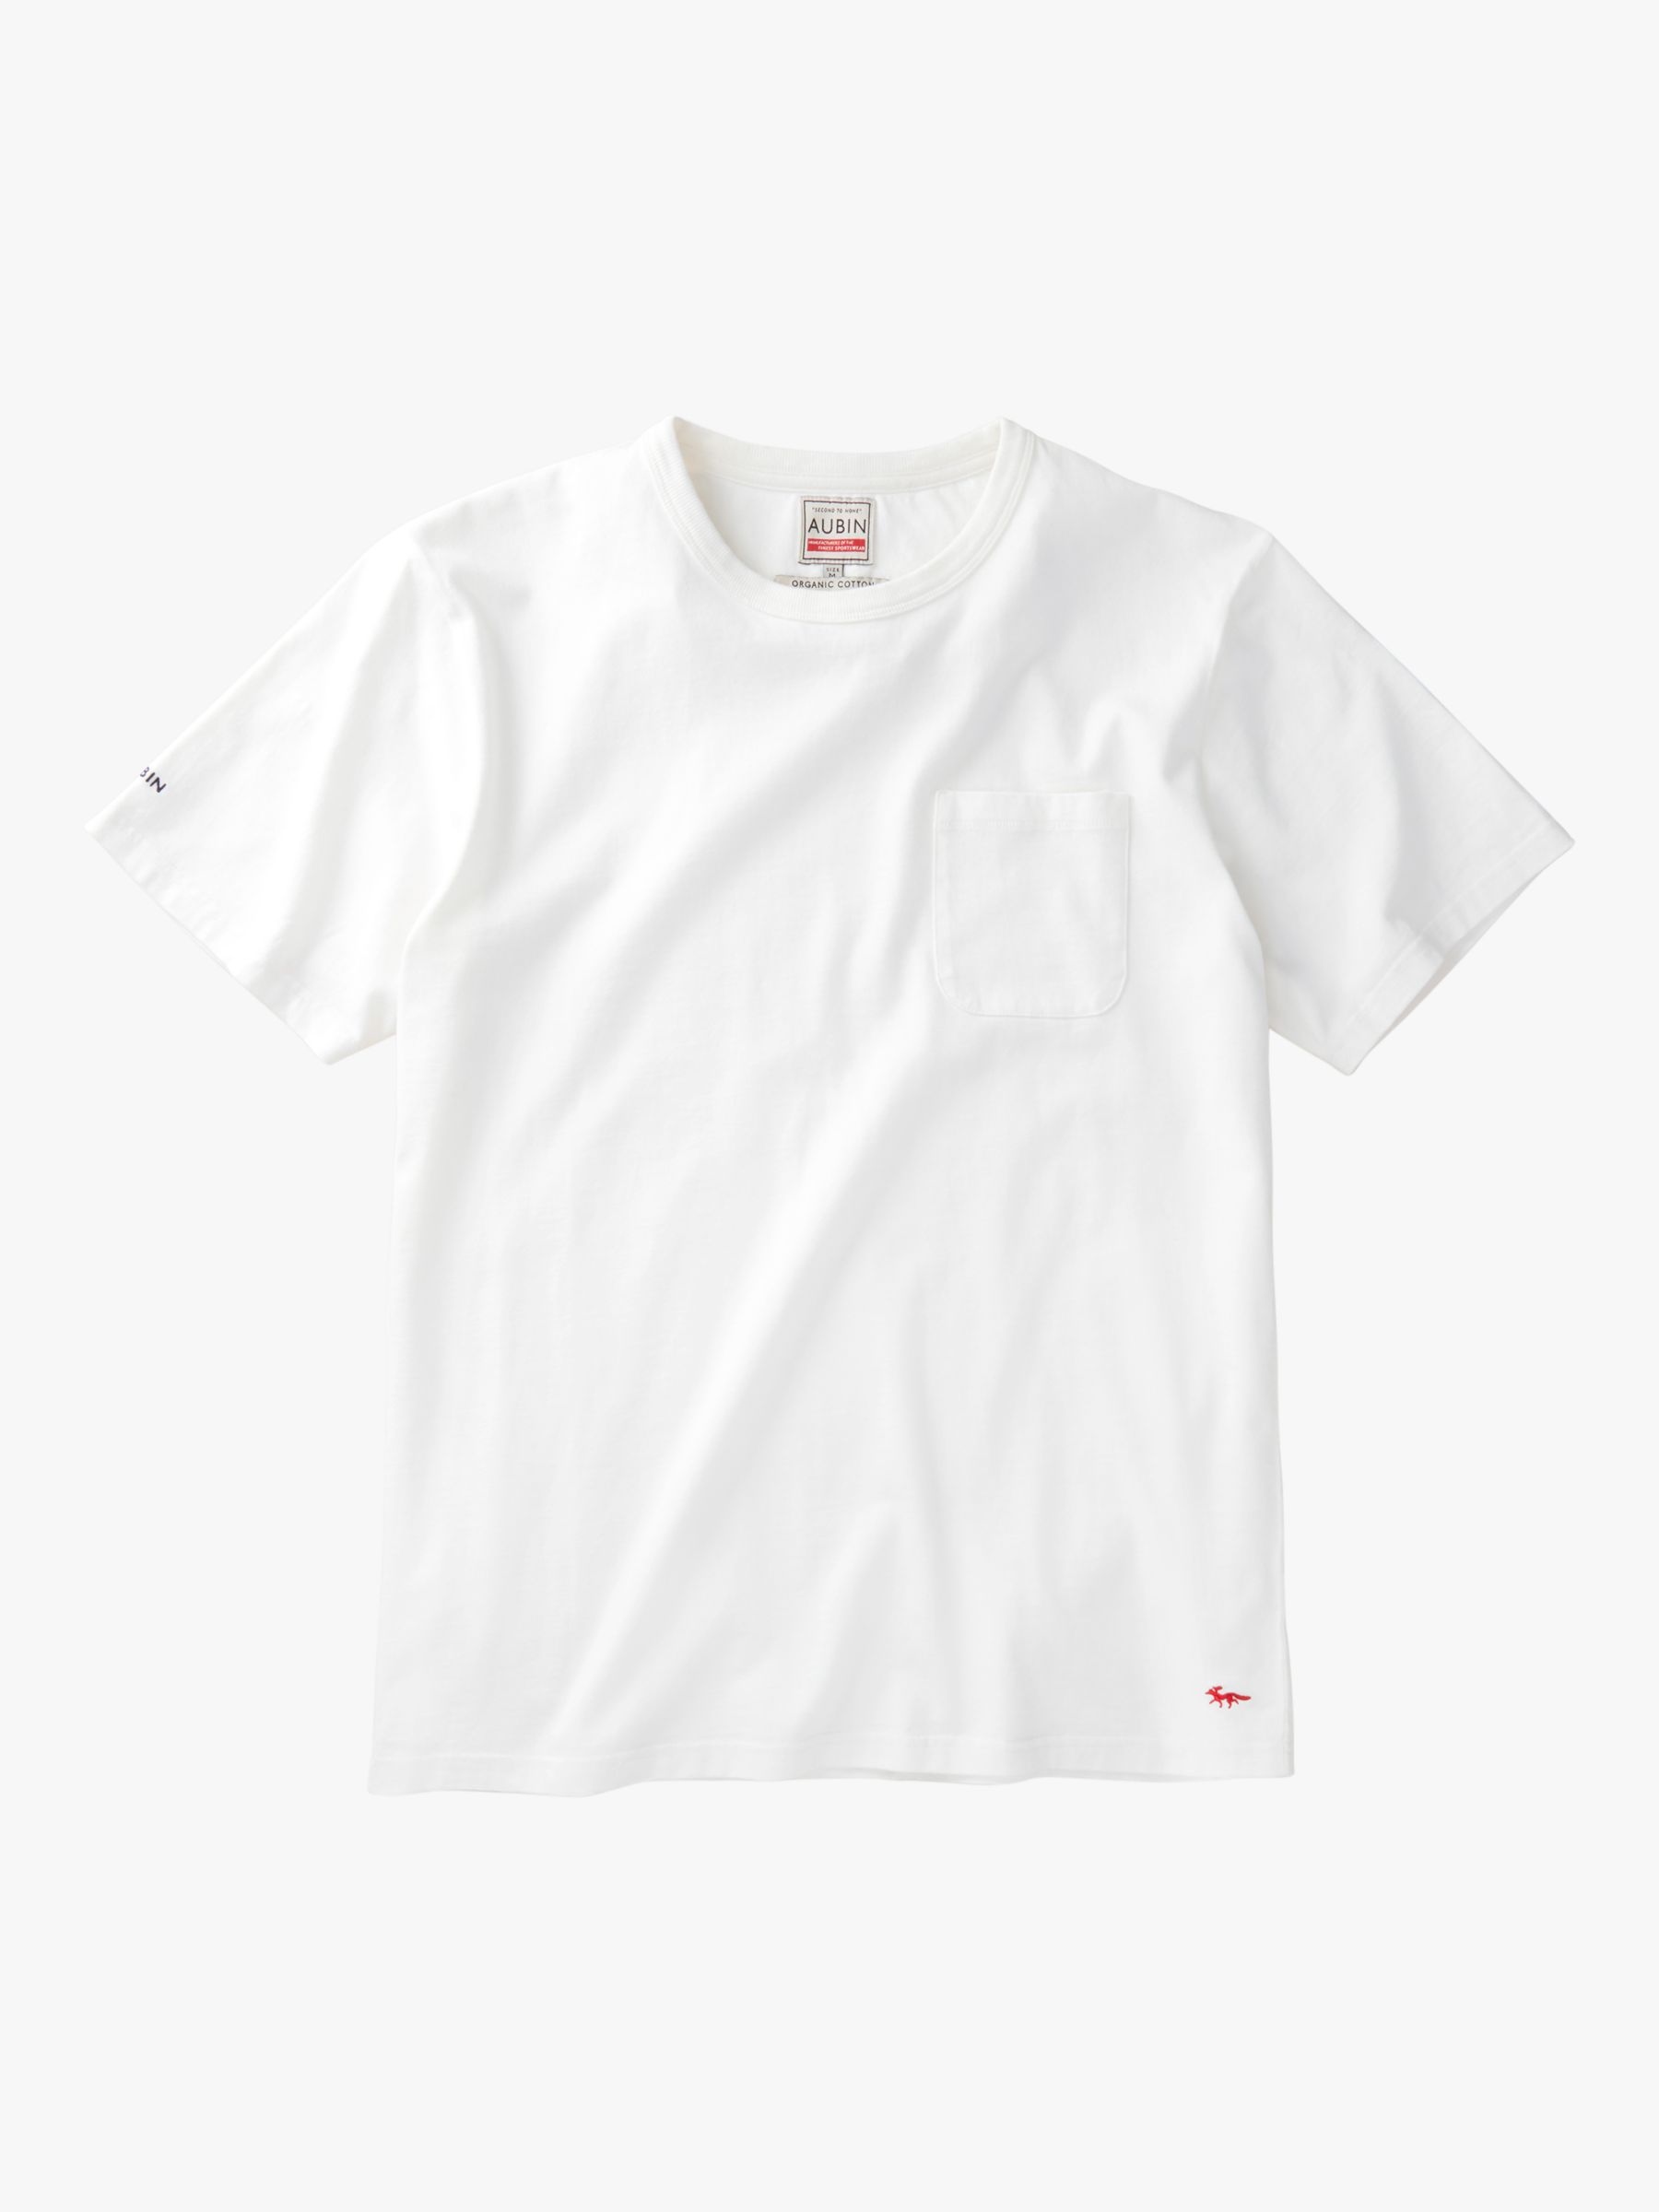 Aubin Newburgh Relaxed Pocket T-Shirt, Chalk White, S